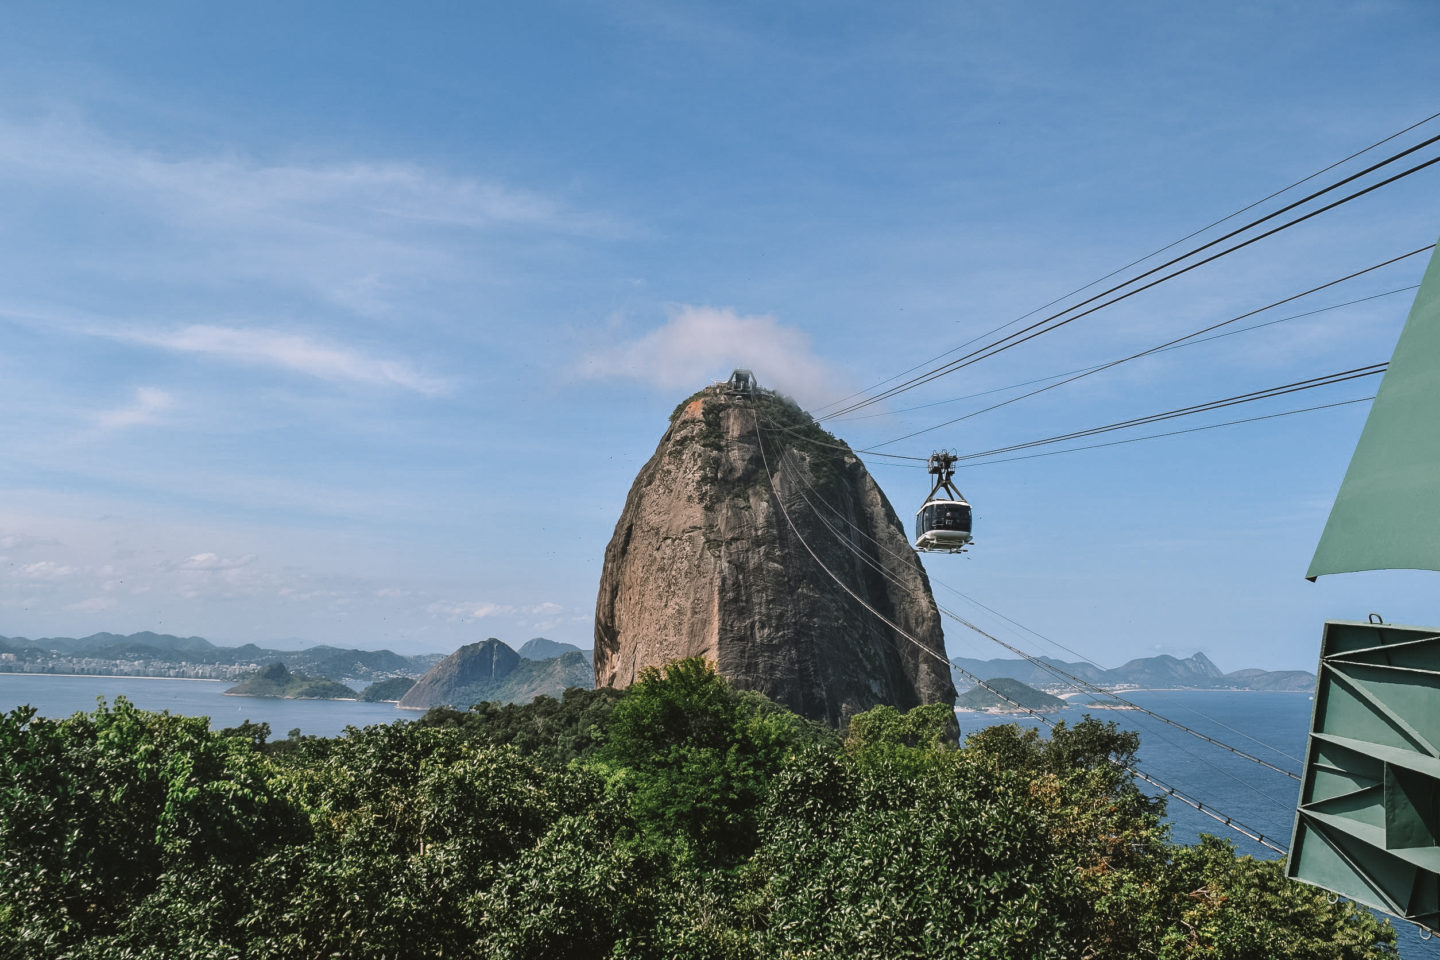 travel Brazil - Sugatloaf mountain